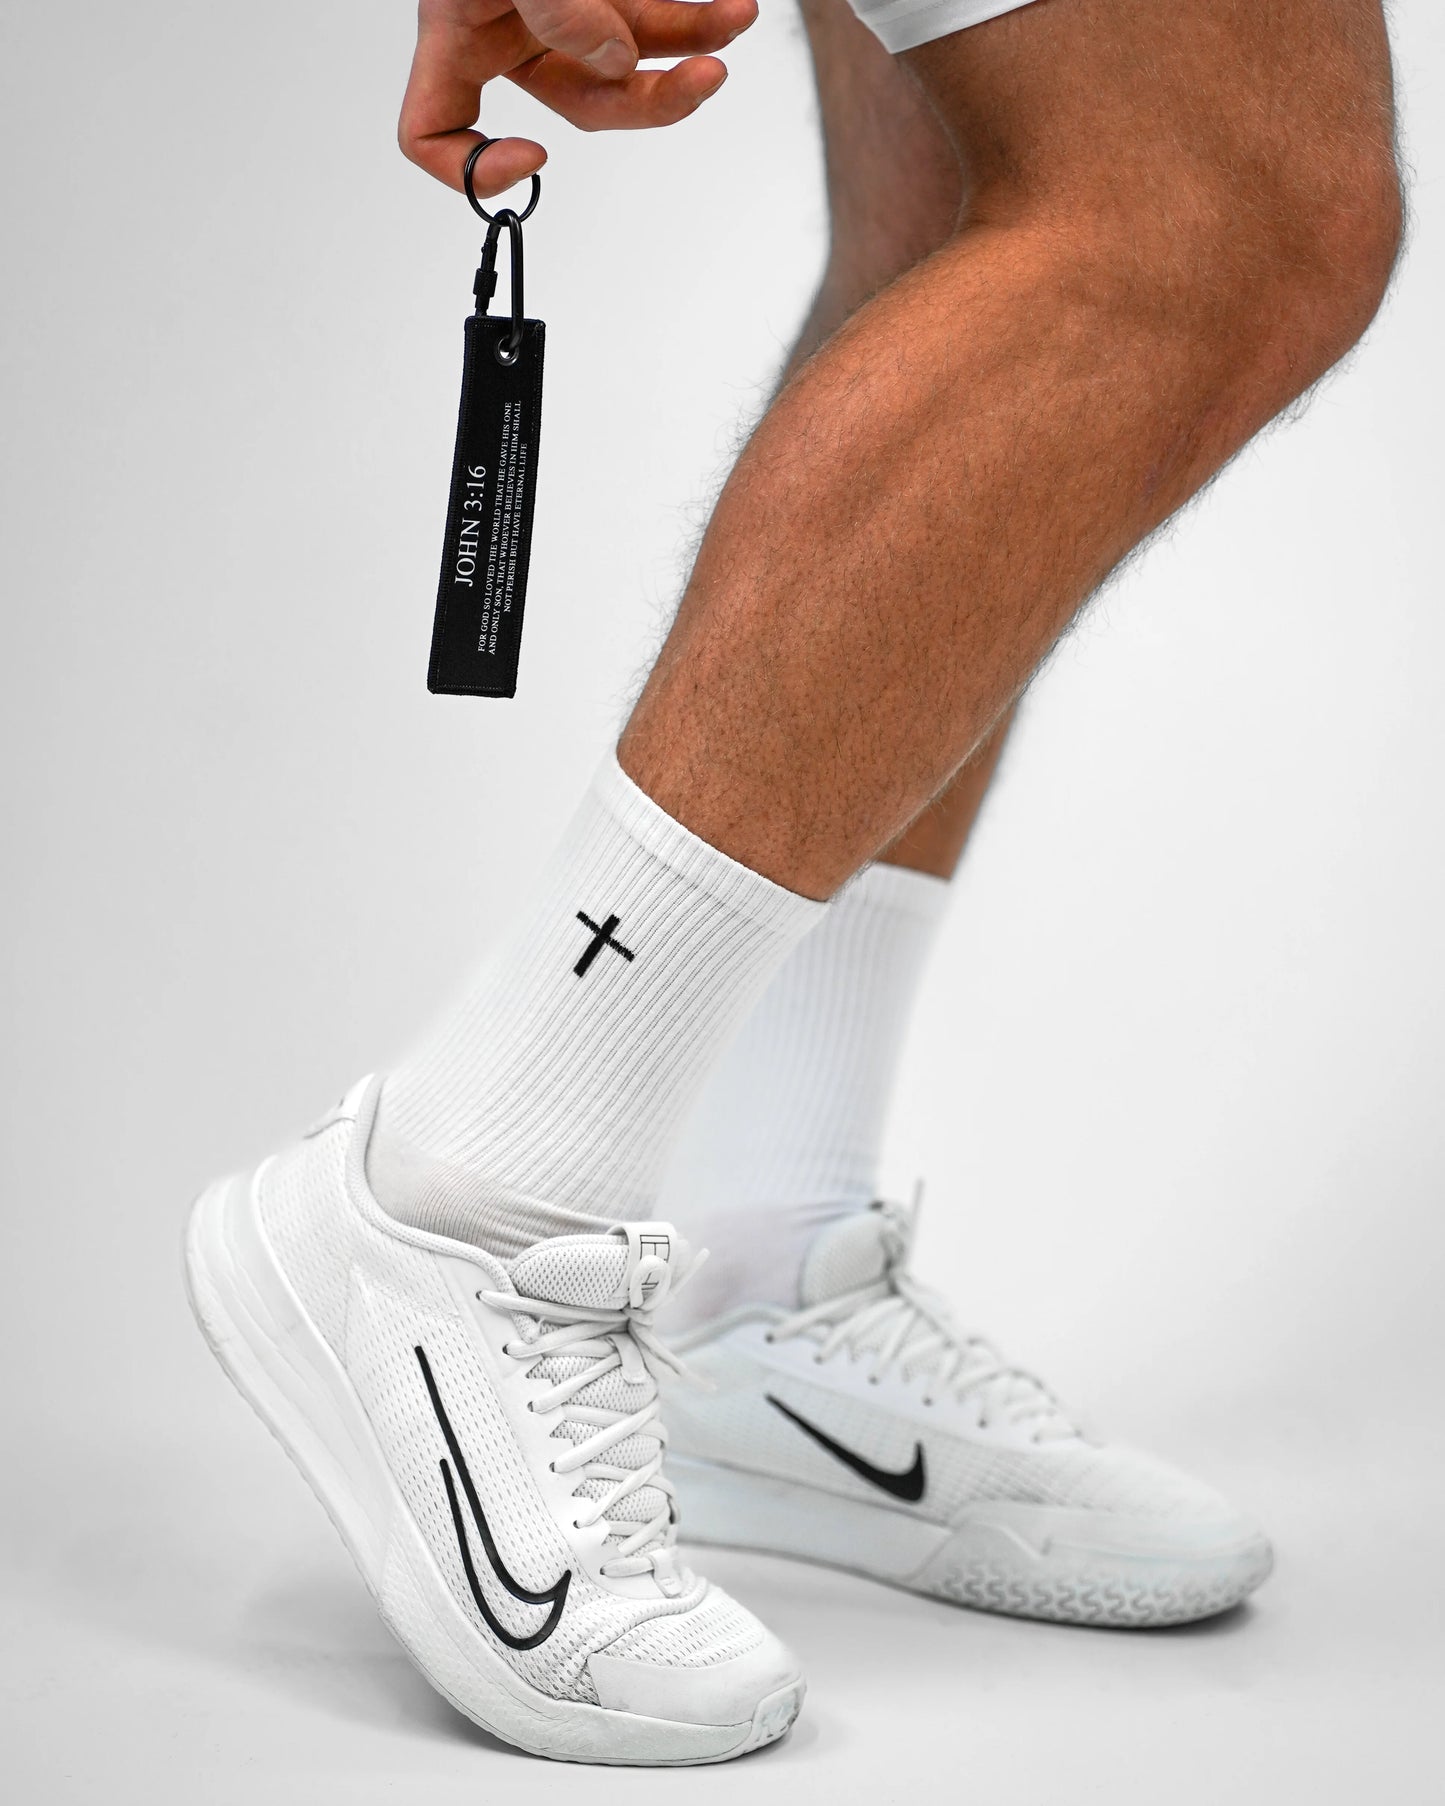 Christian Performance Socks + Keychain